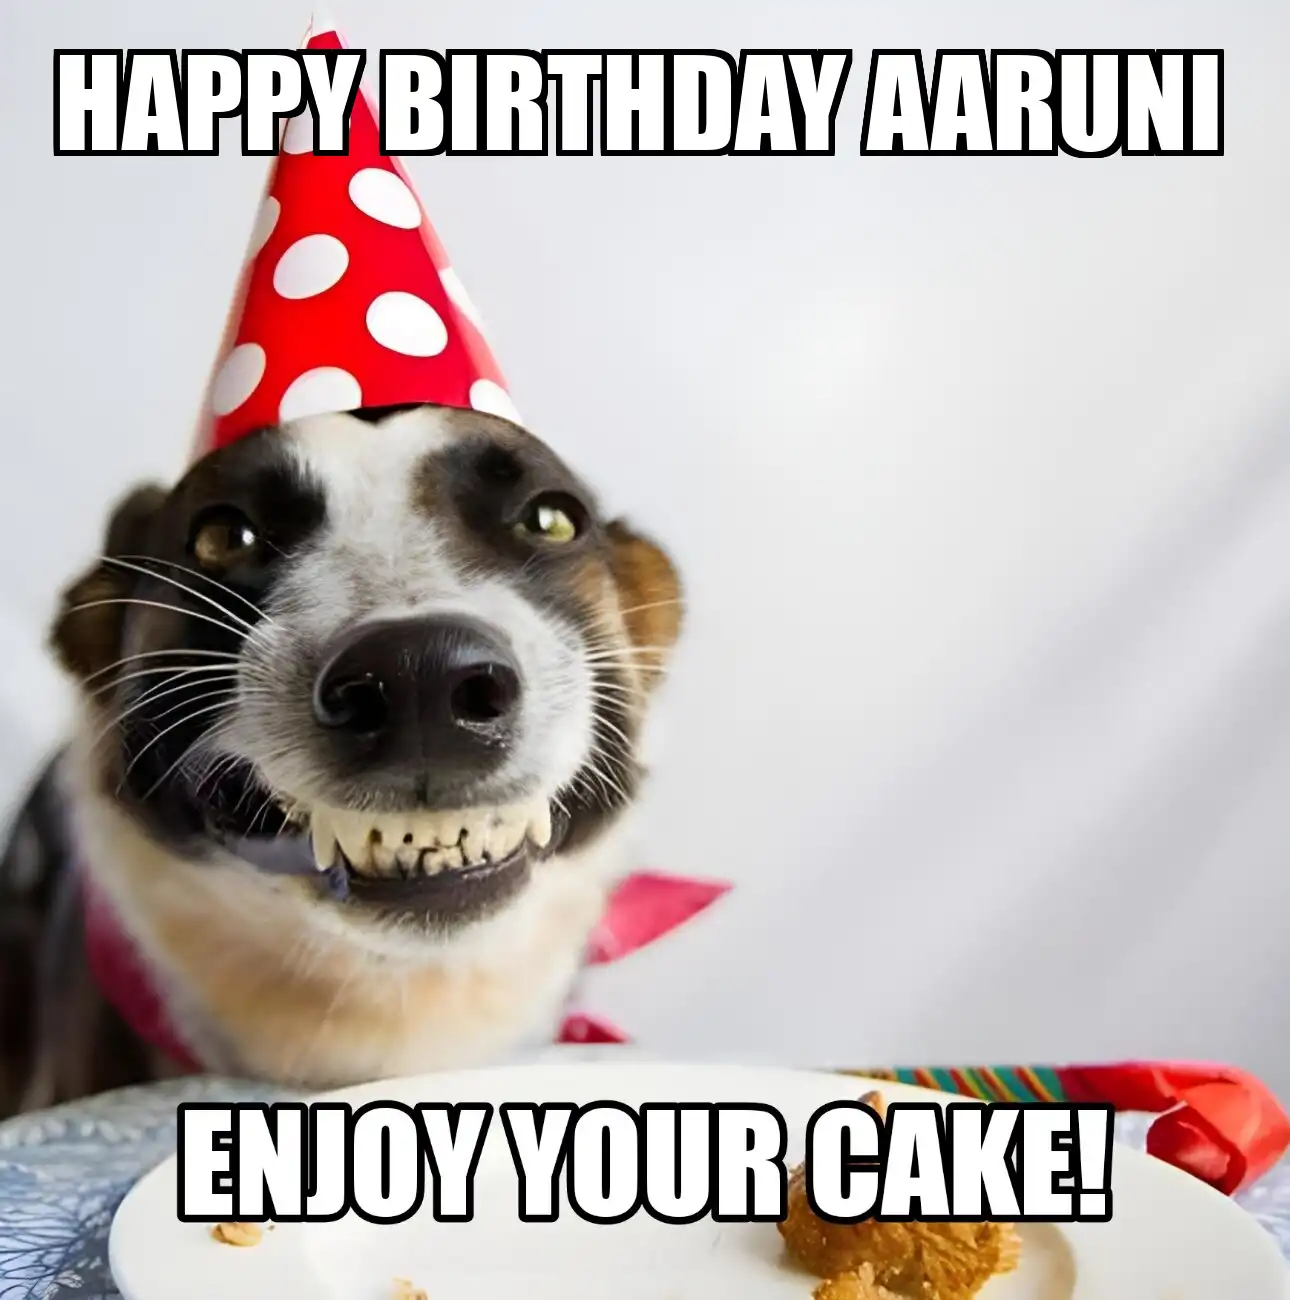 Happy Birthday Aaruni Enjoy Your Cake Dog Meme